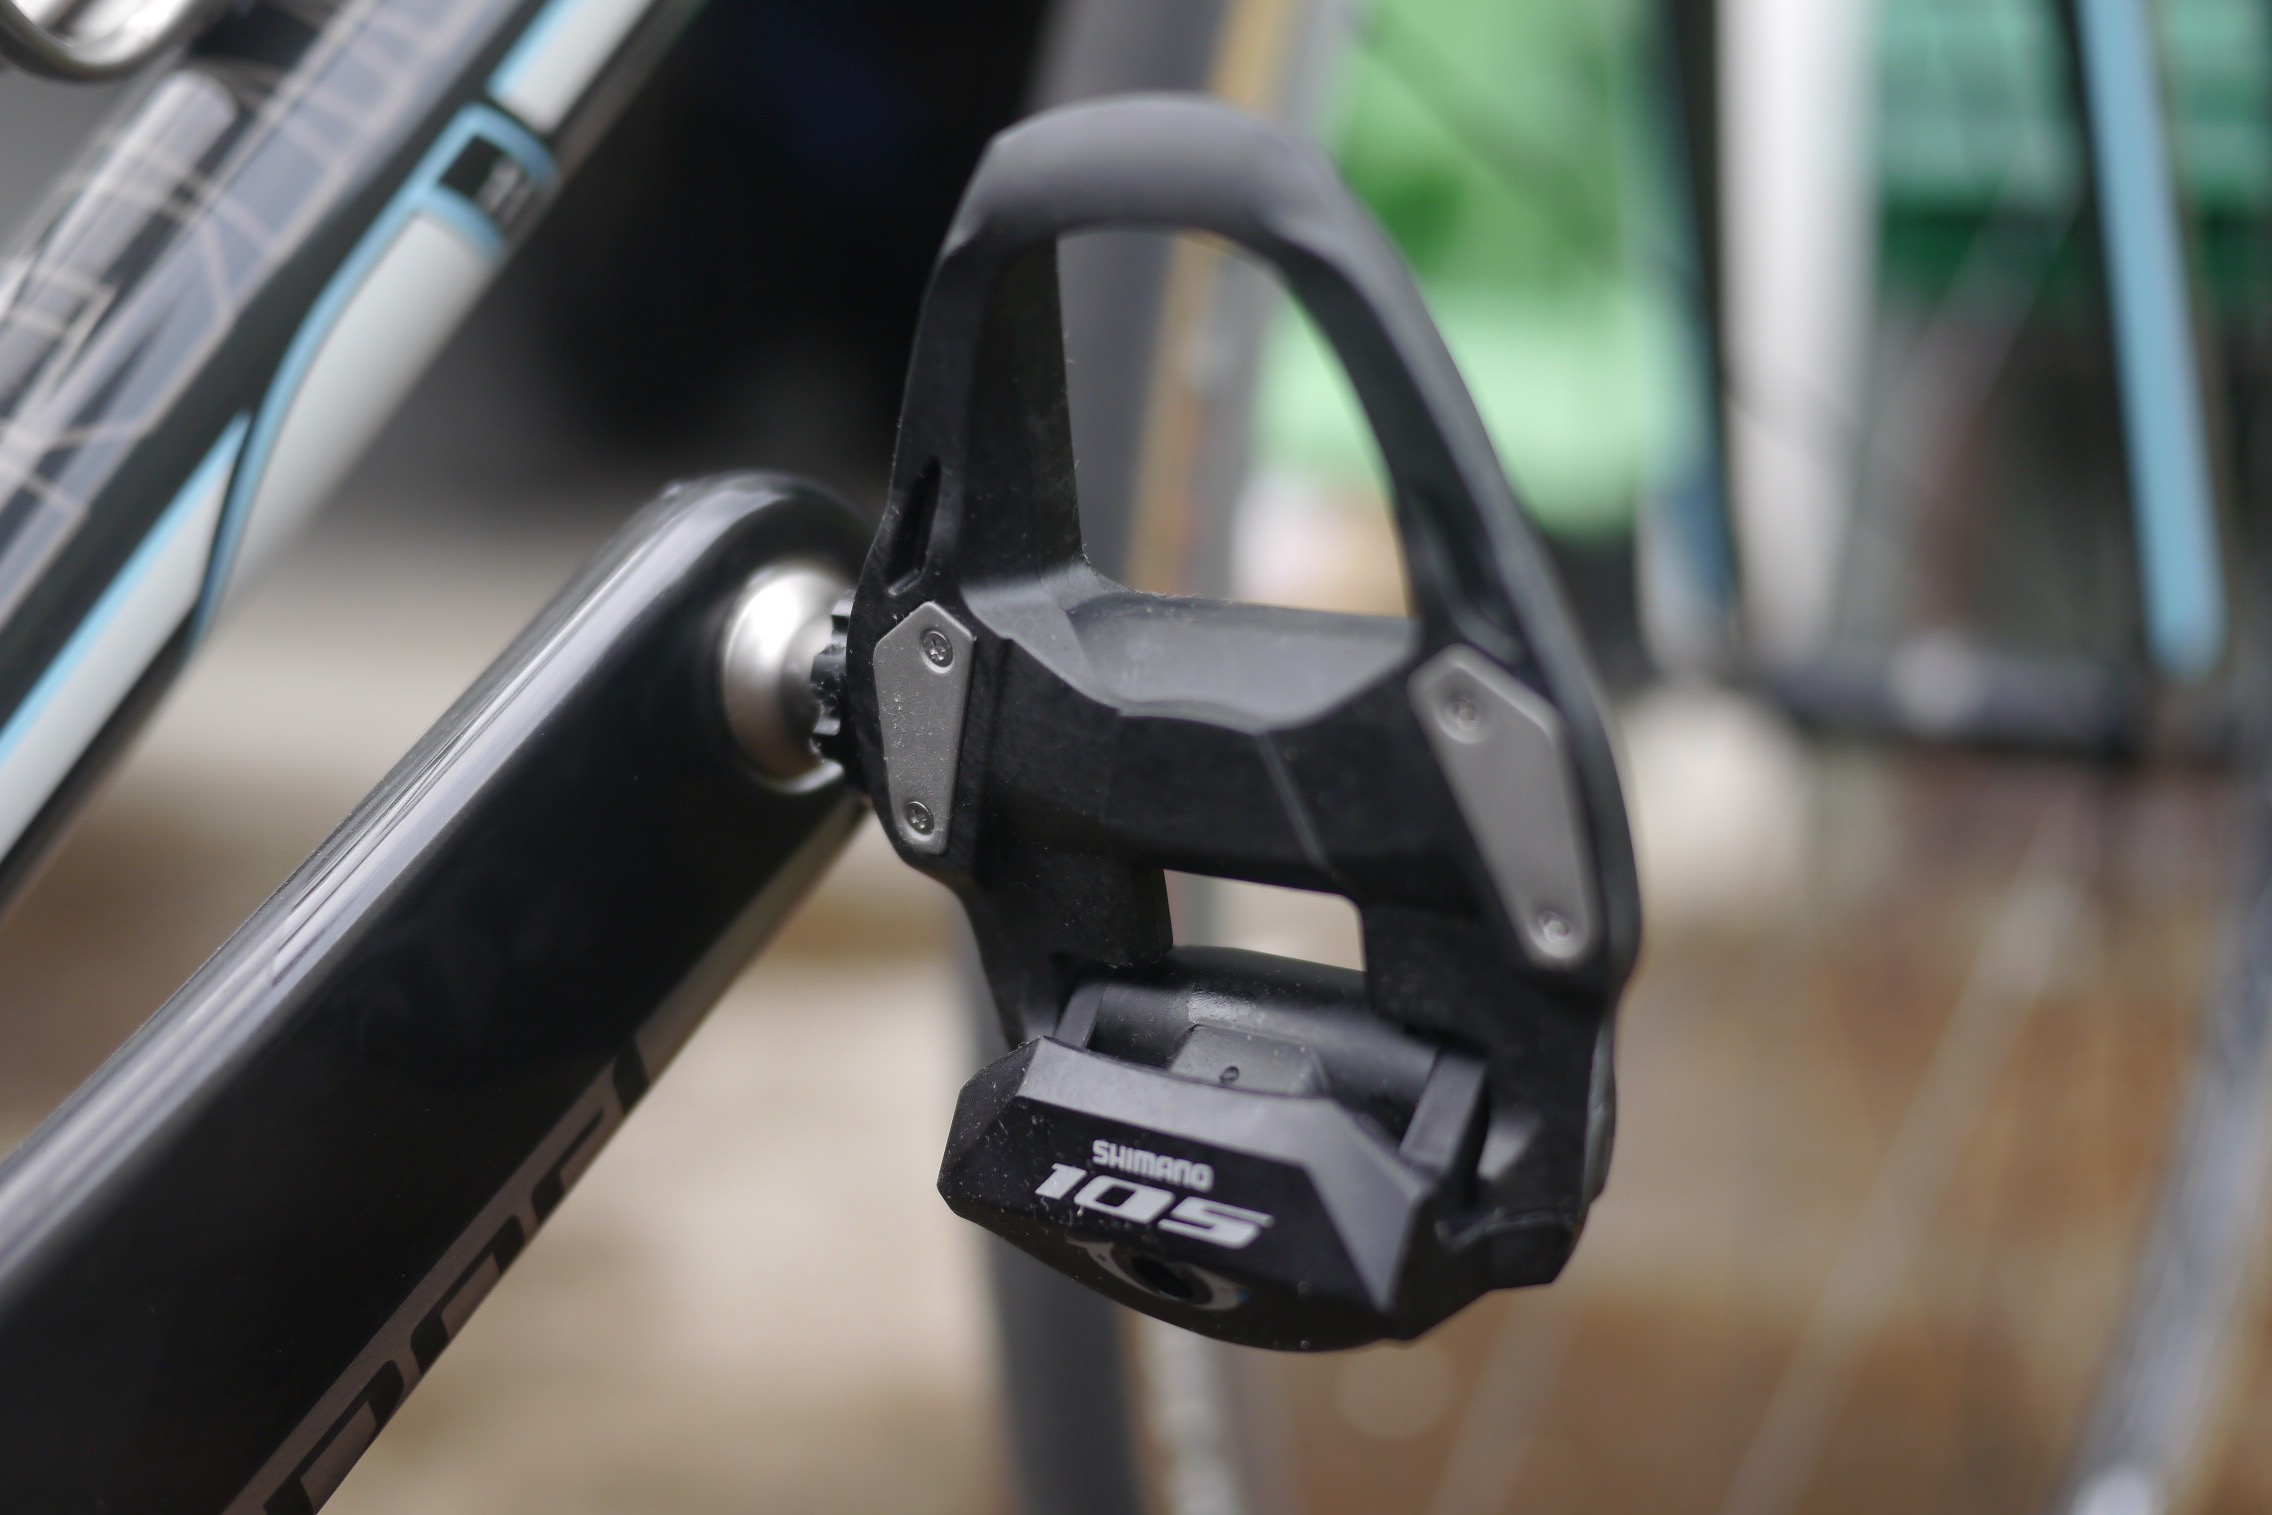 Shimano 105 road bike pedals detail shot